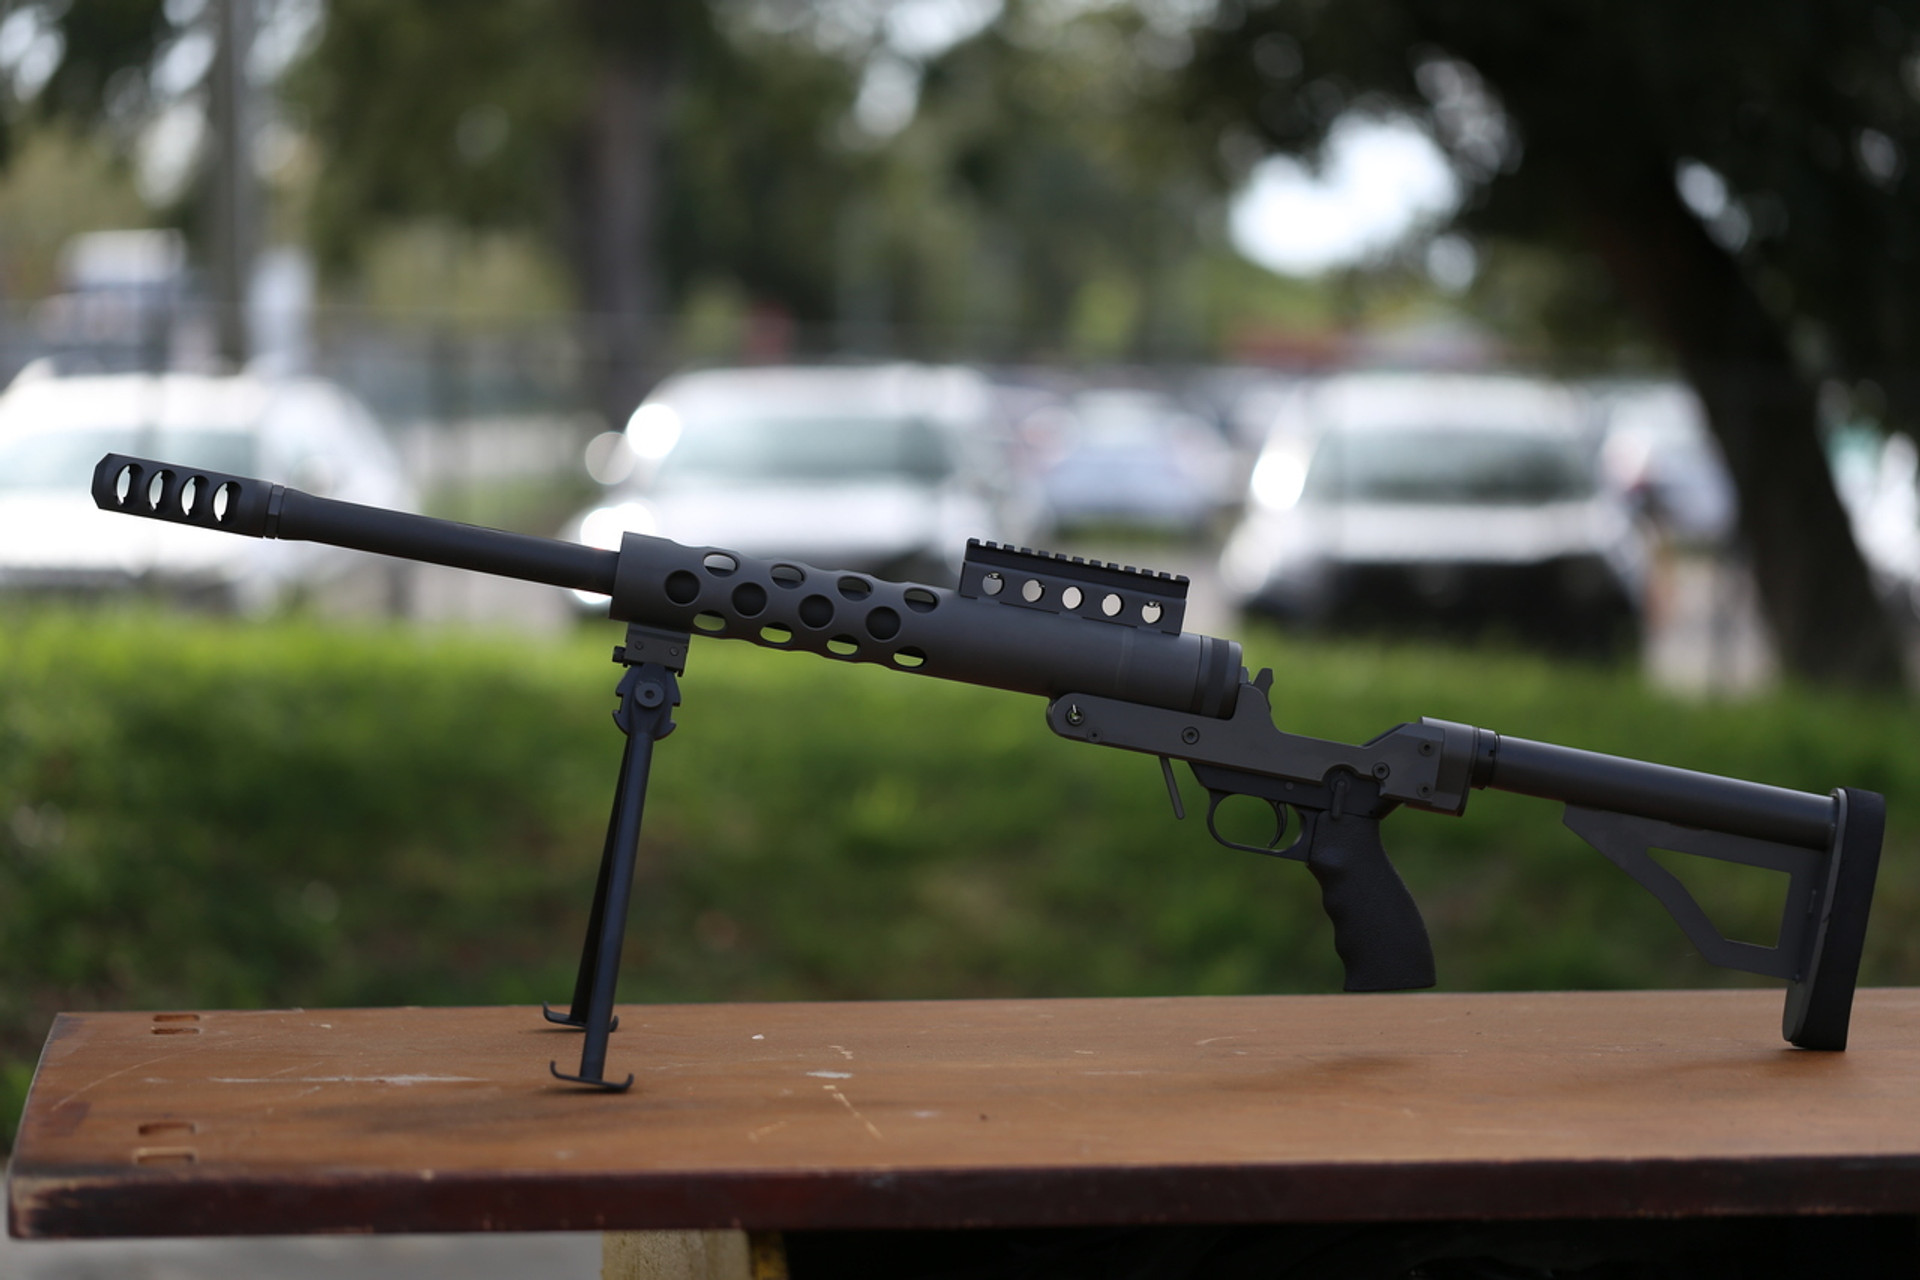 50 BMG submachine guns built by brazilian gang members : r